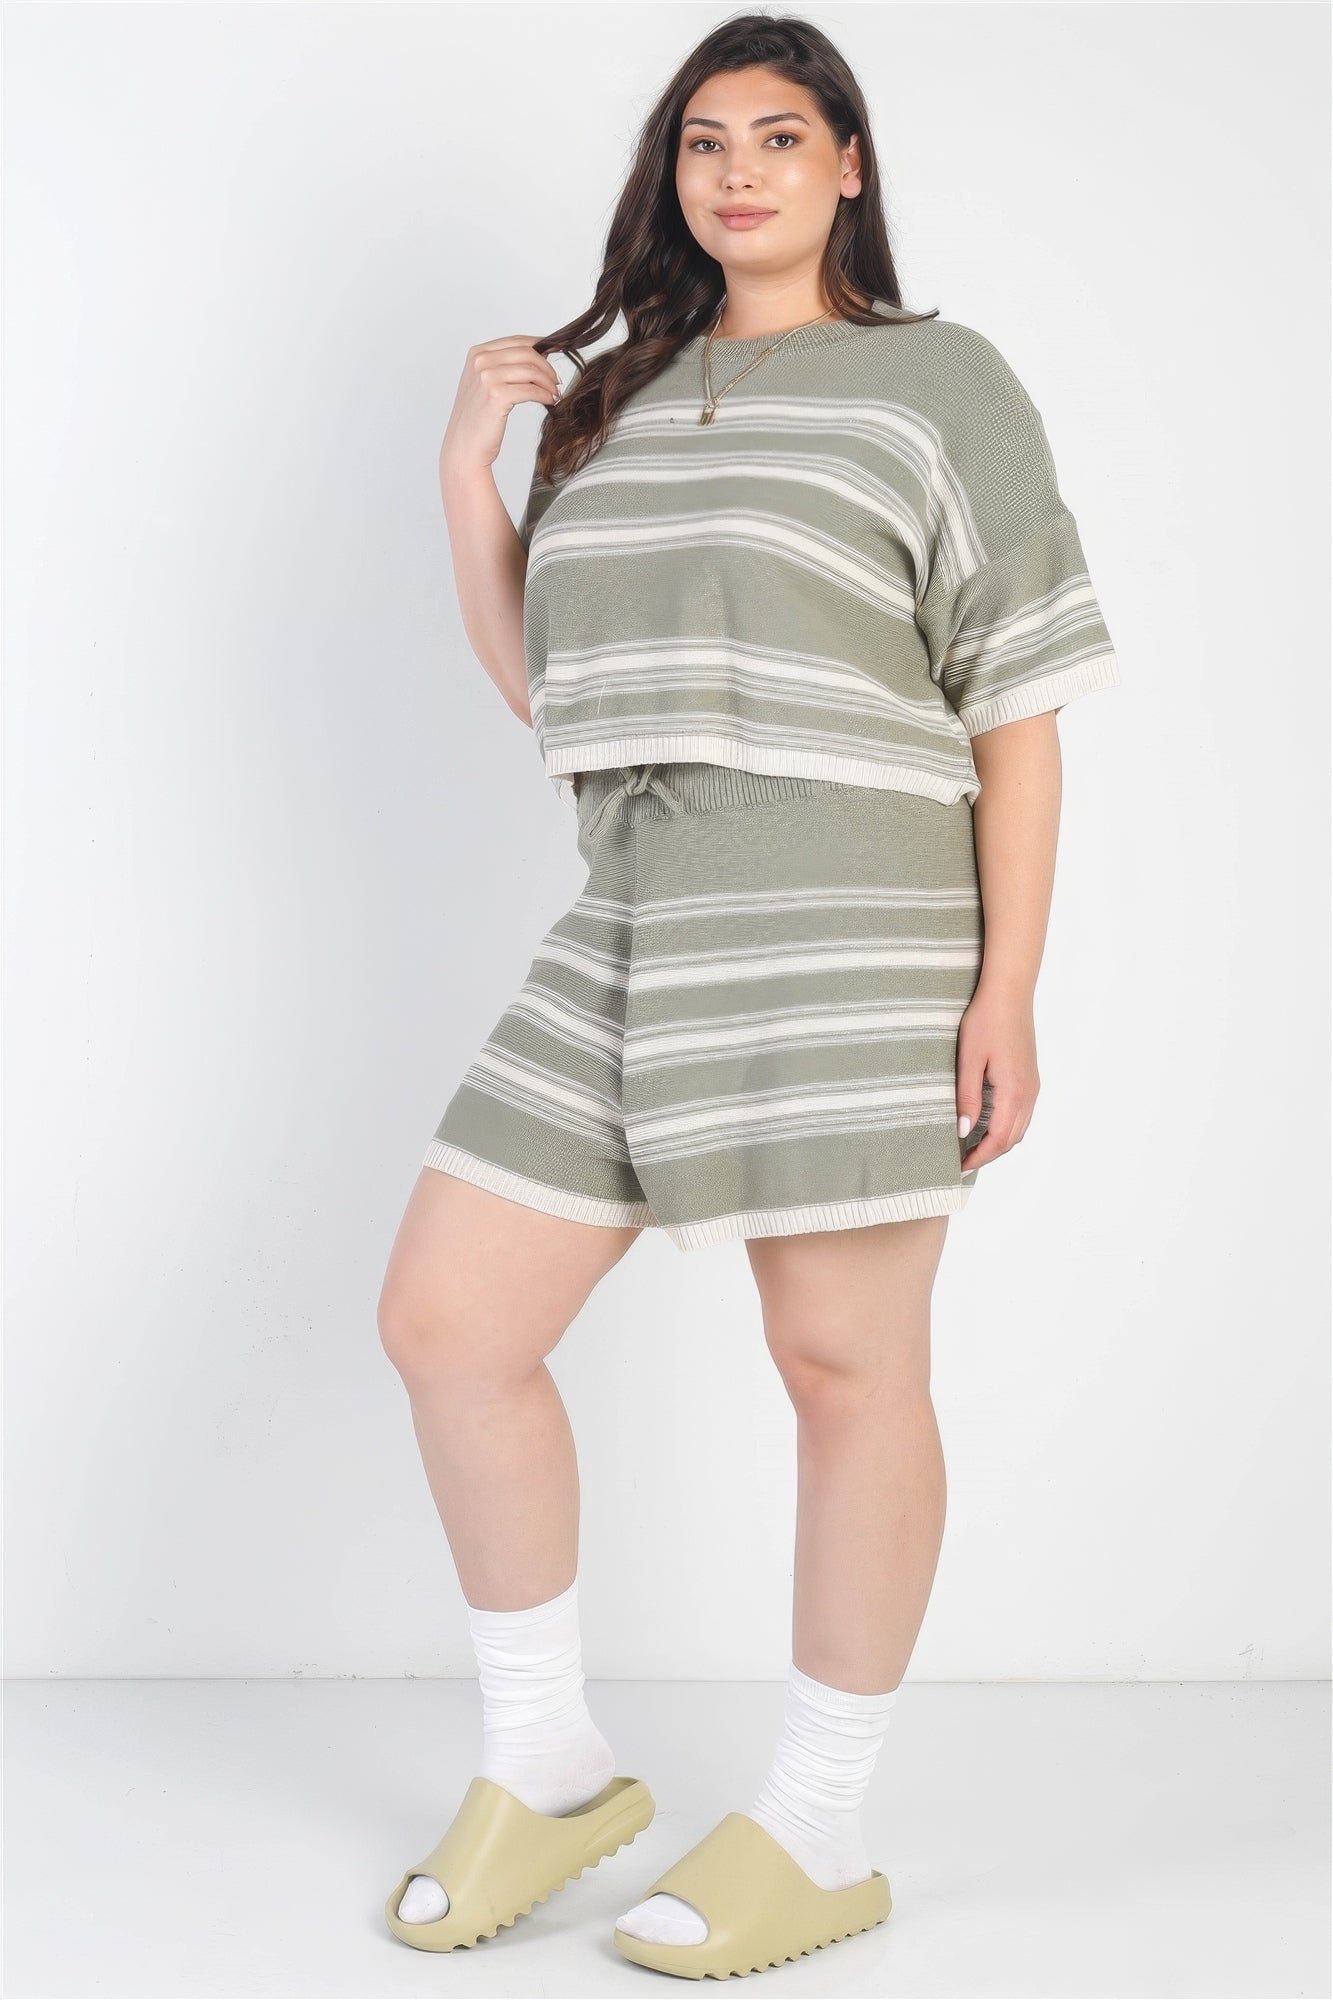 THE MARISSA Plus Olive Striped Knit Short Sleeve Crop Top High Waist Shorts Set